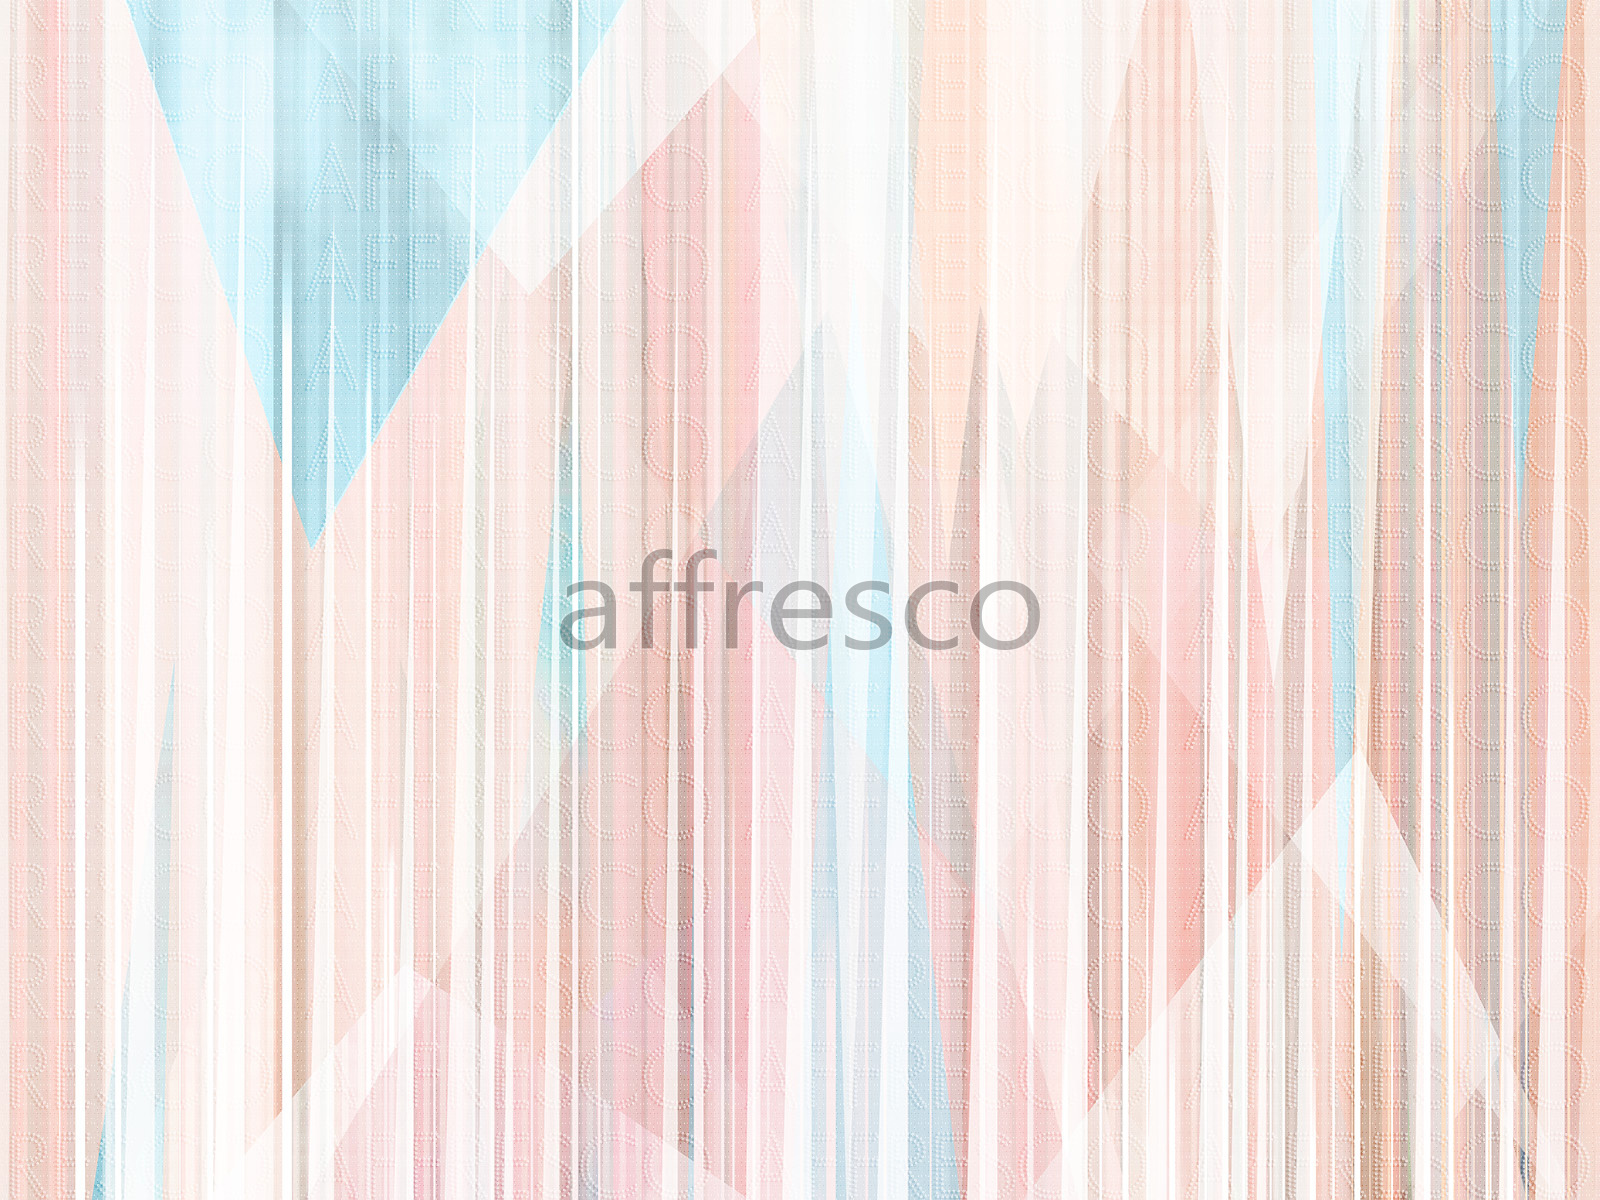 RE930-COL1 | Fine Art | Affresco Factory